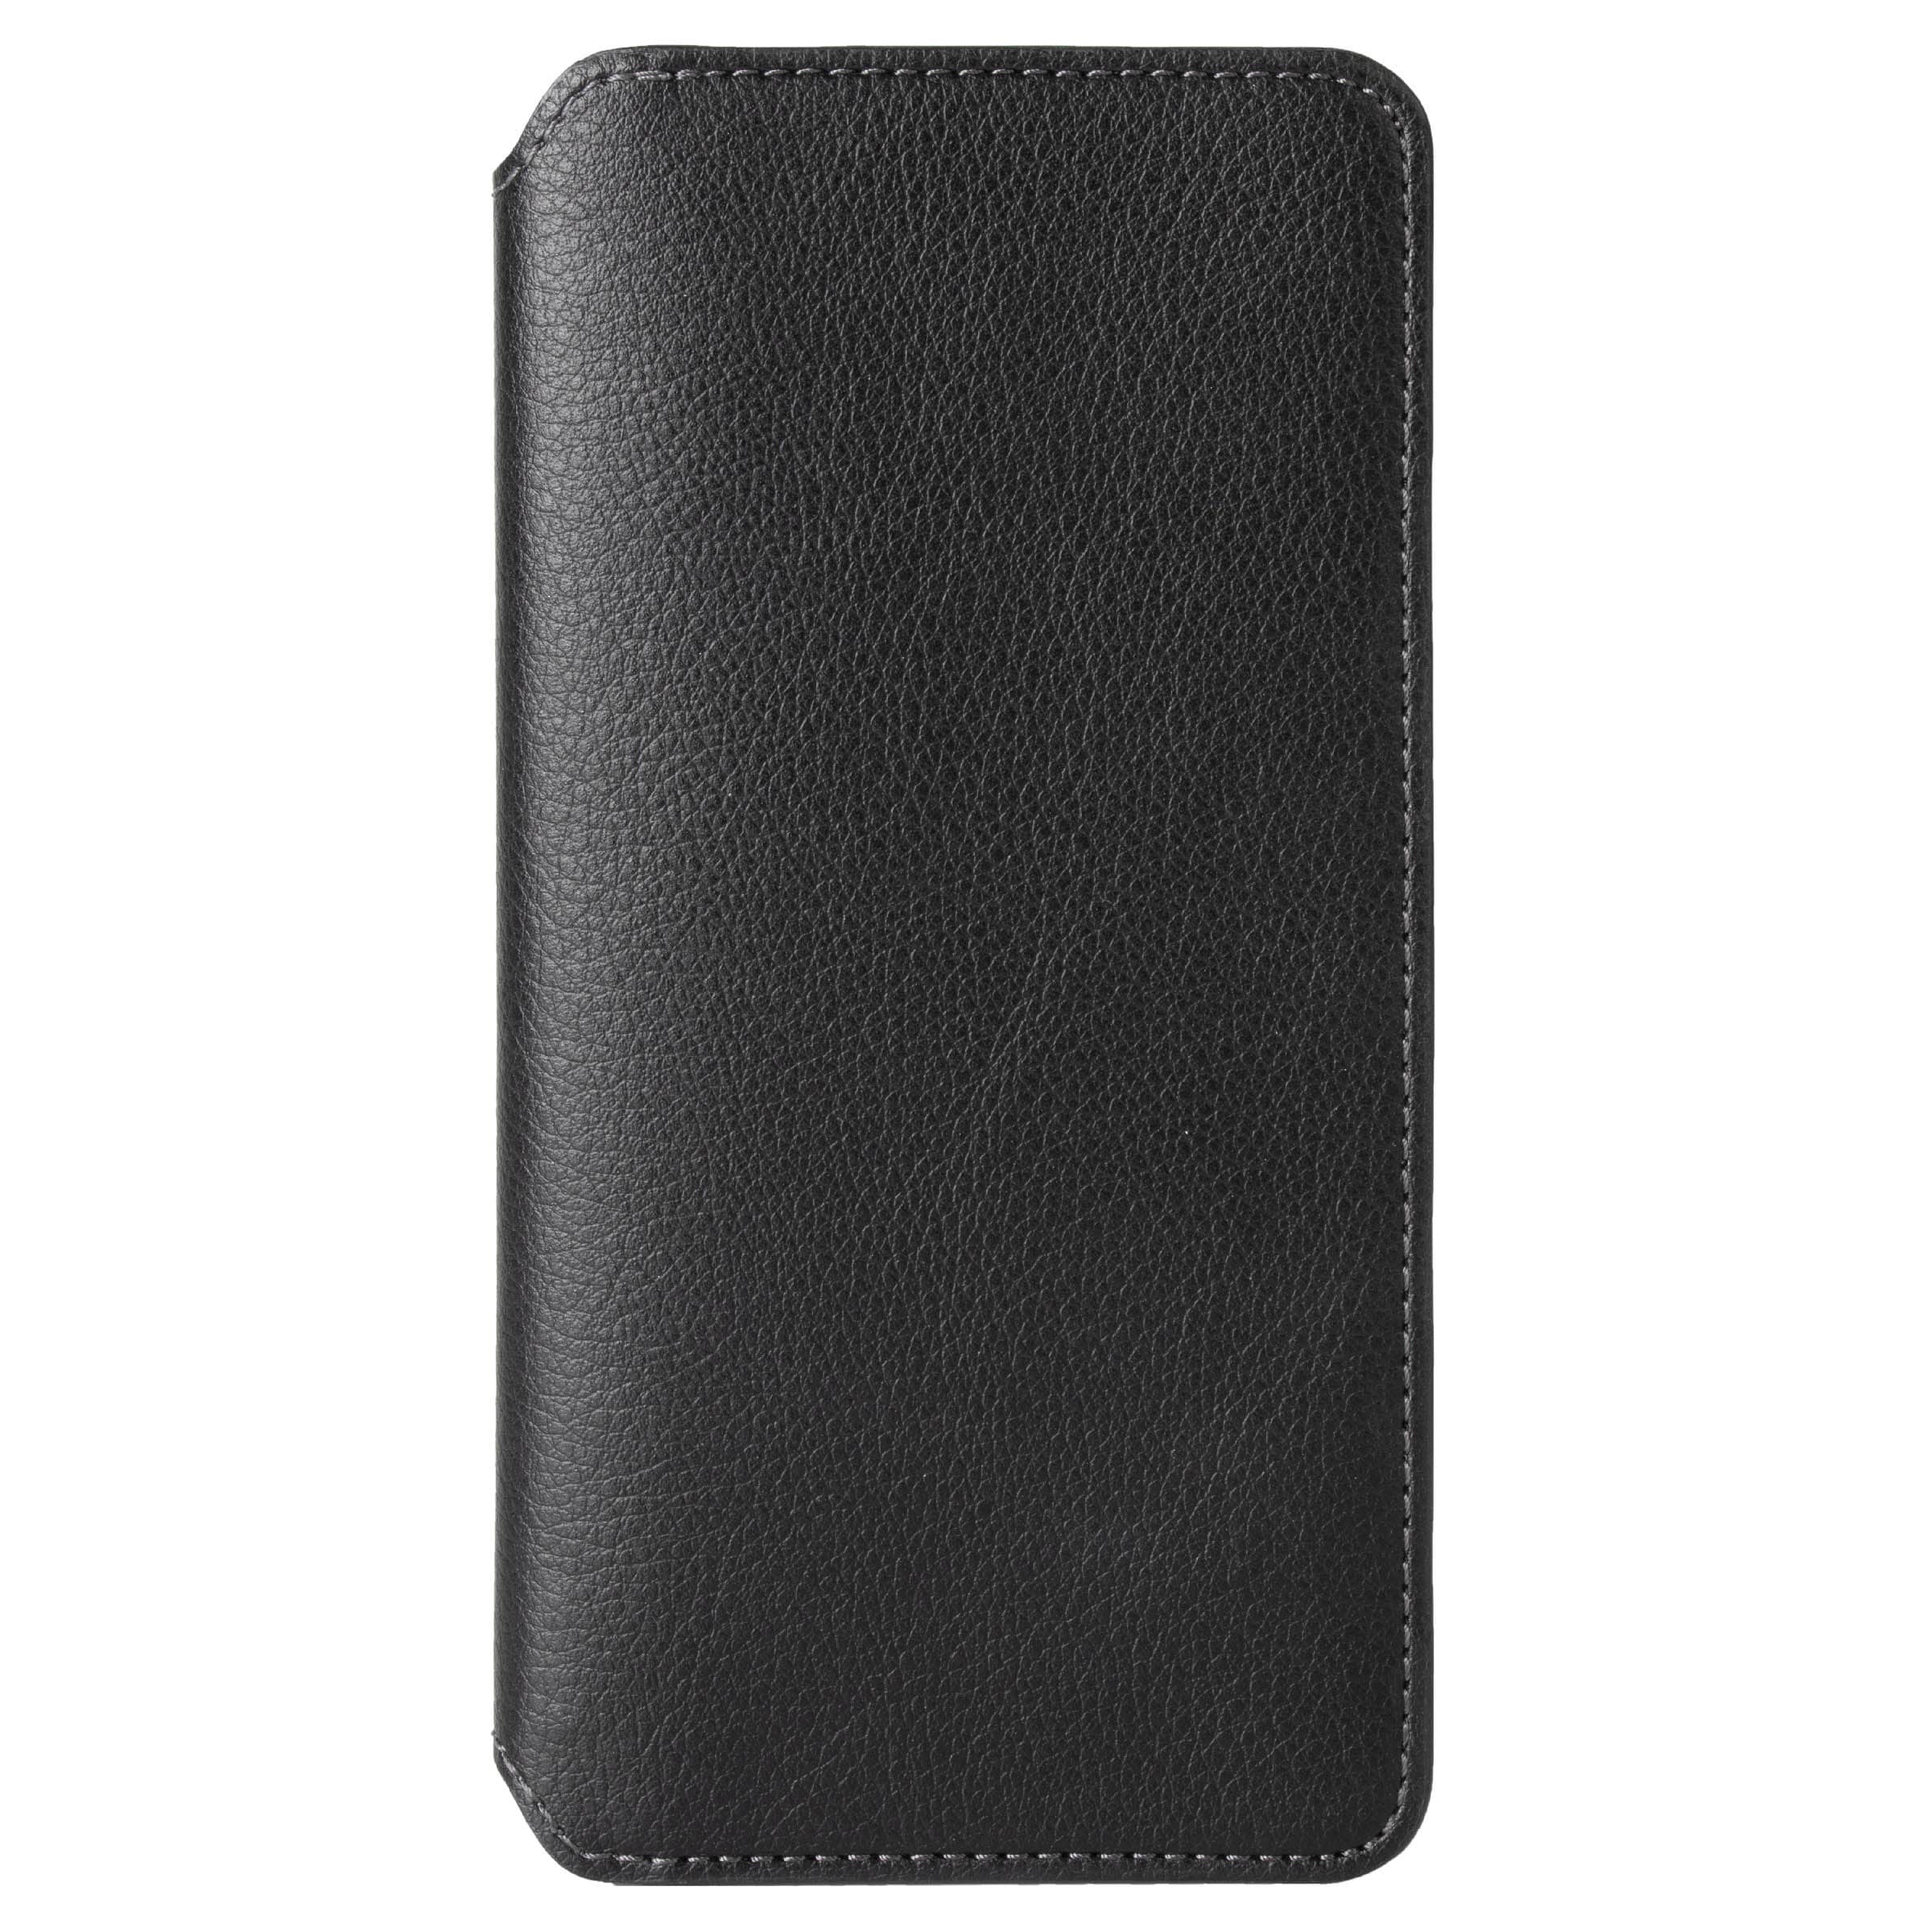 Krusell Pixbo 4 Card Slim Wallet Case Samsung Galaxy A70